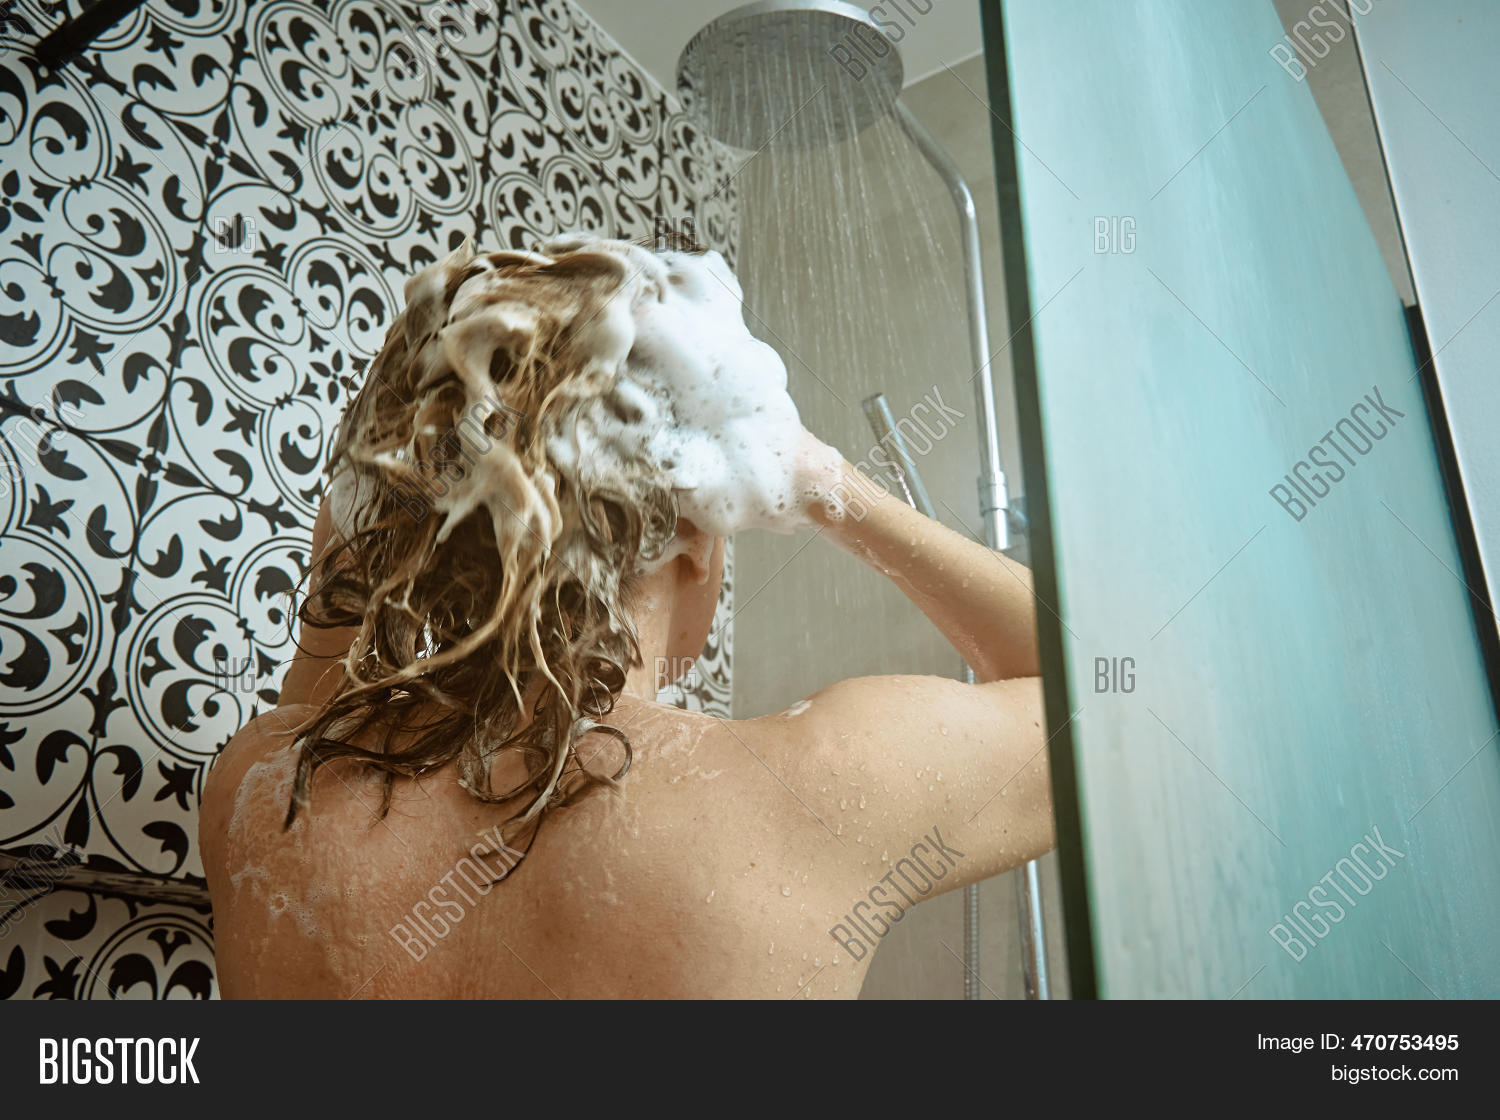 alix salinas share taking a bath naked photos